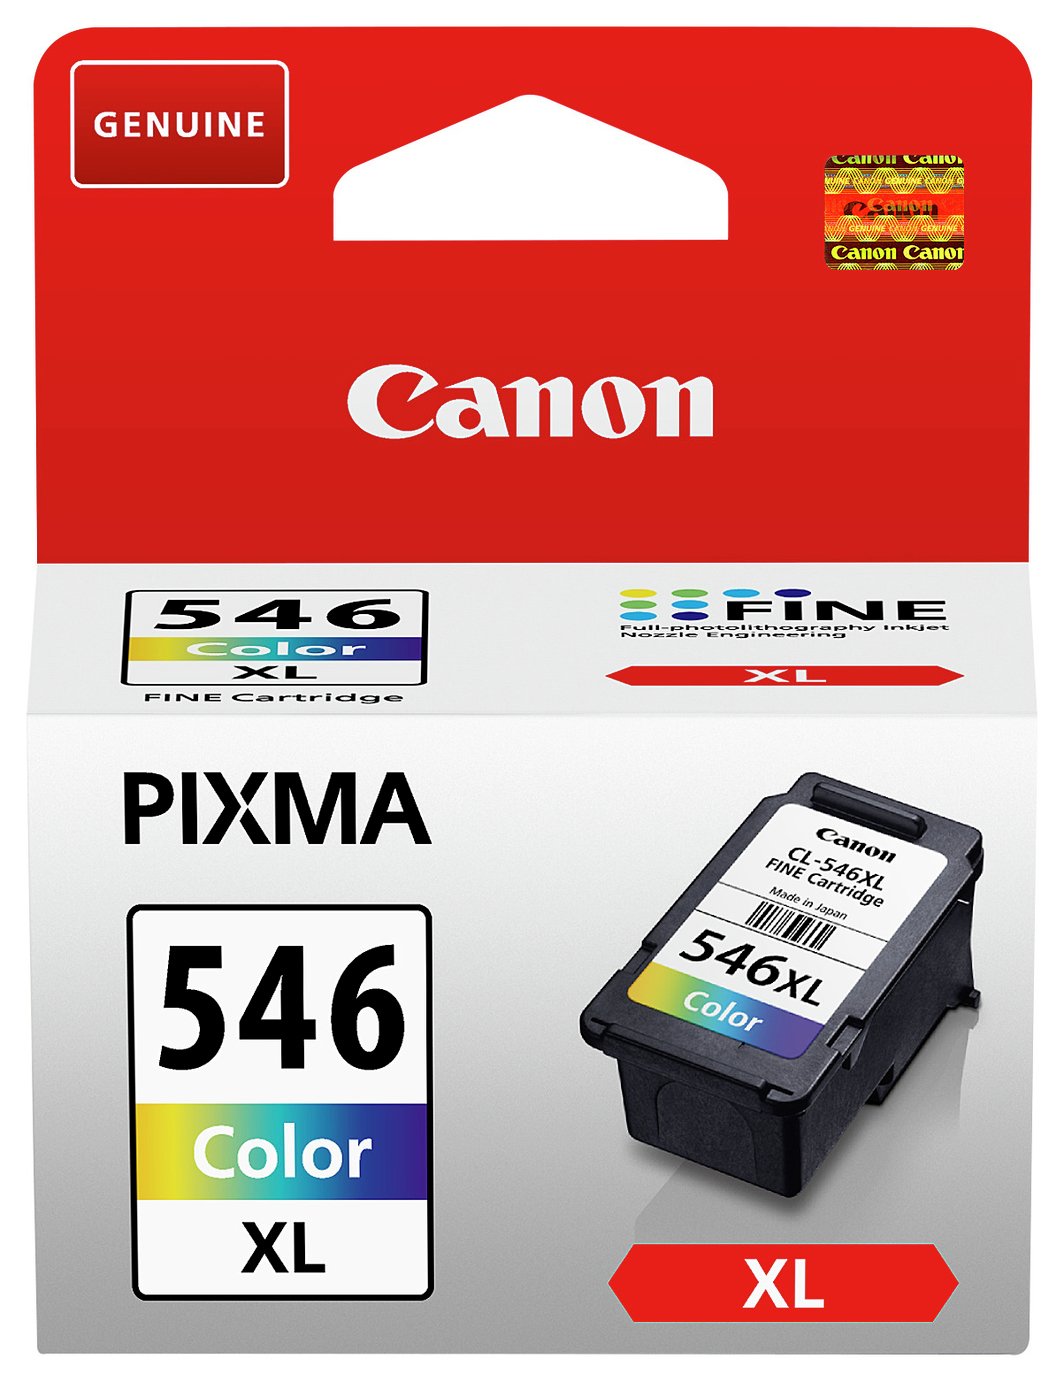 Canon CL-546 XL High Capacity Ink Cartridge - Colour